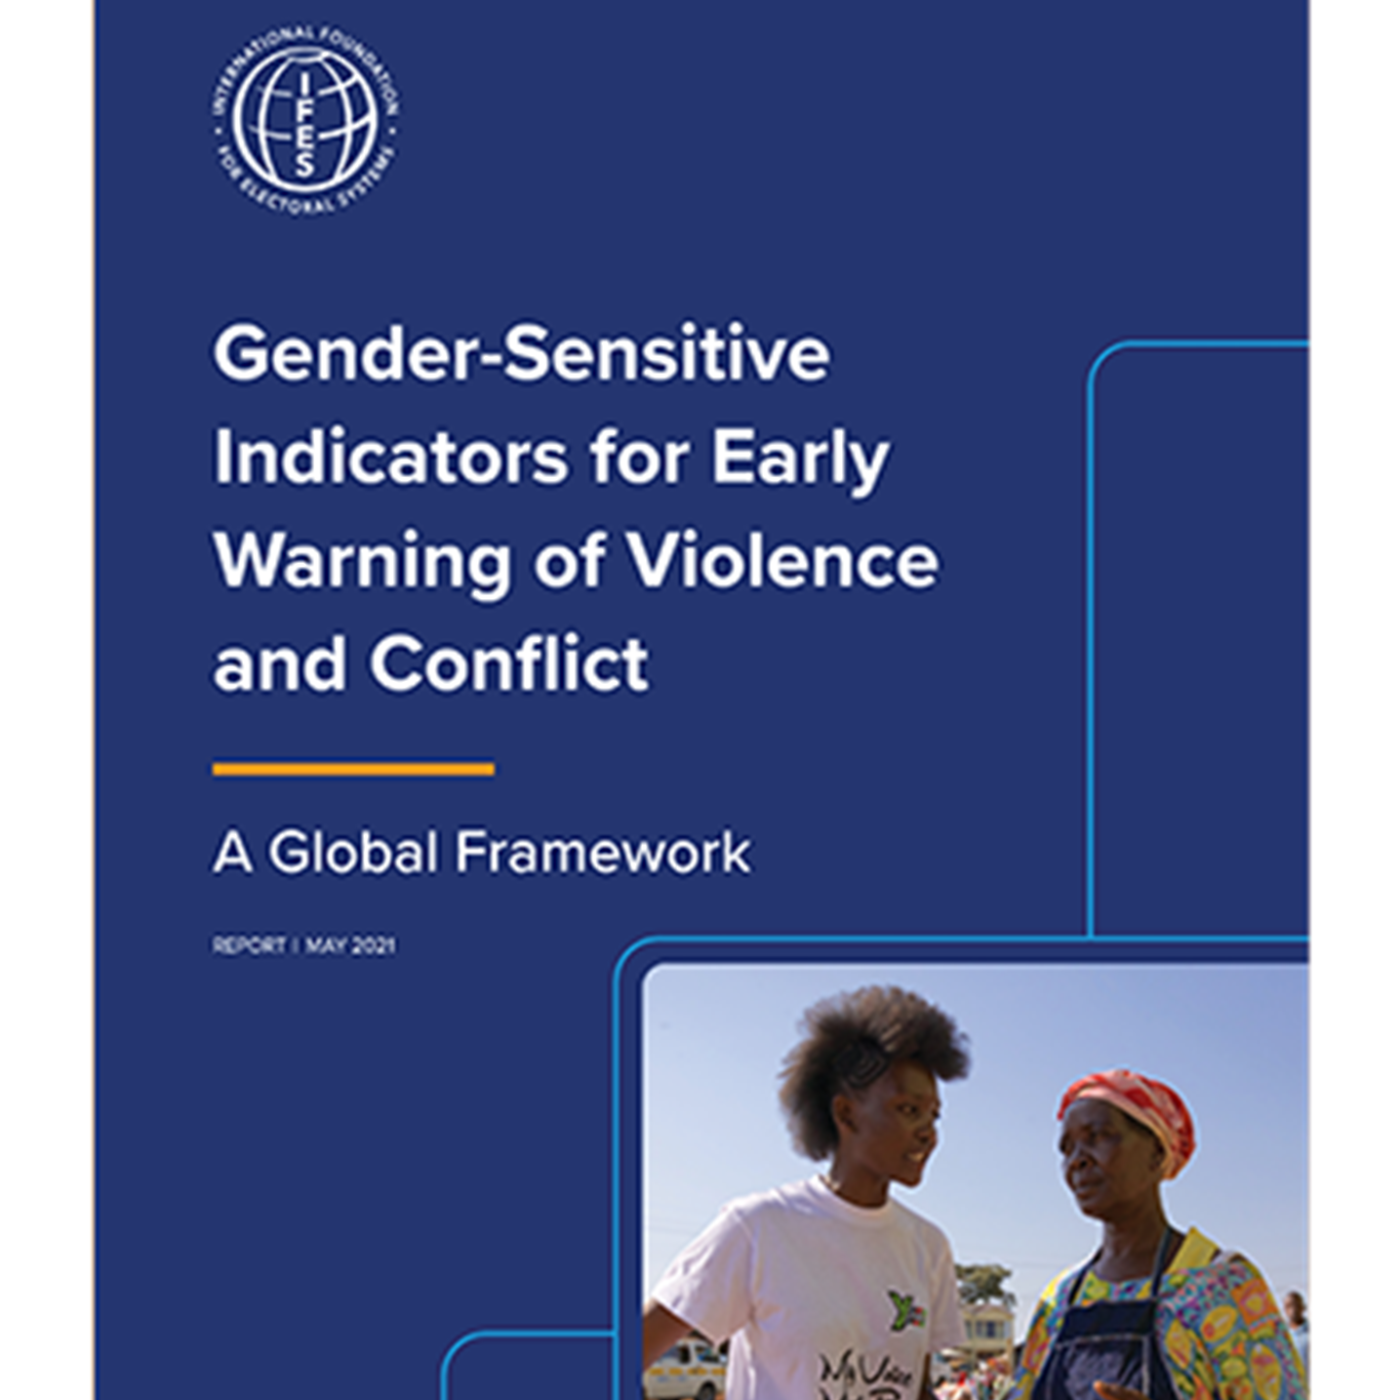 The cover image of IFES' Gender Sensitive Indicators publication